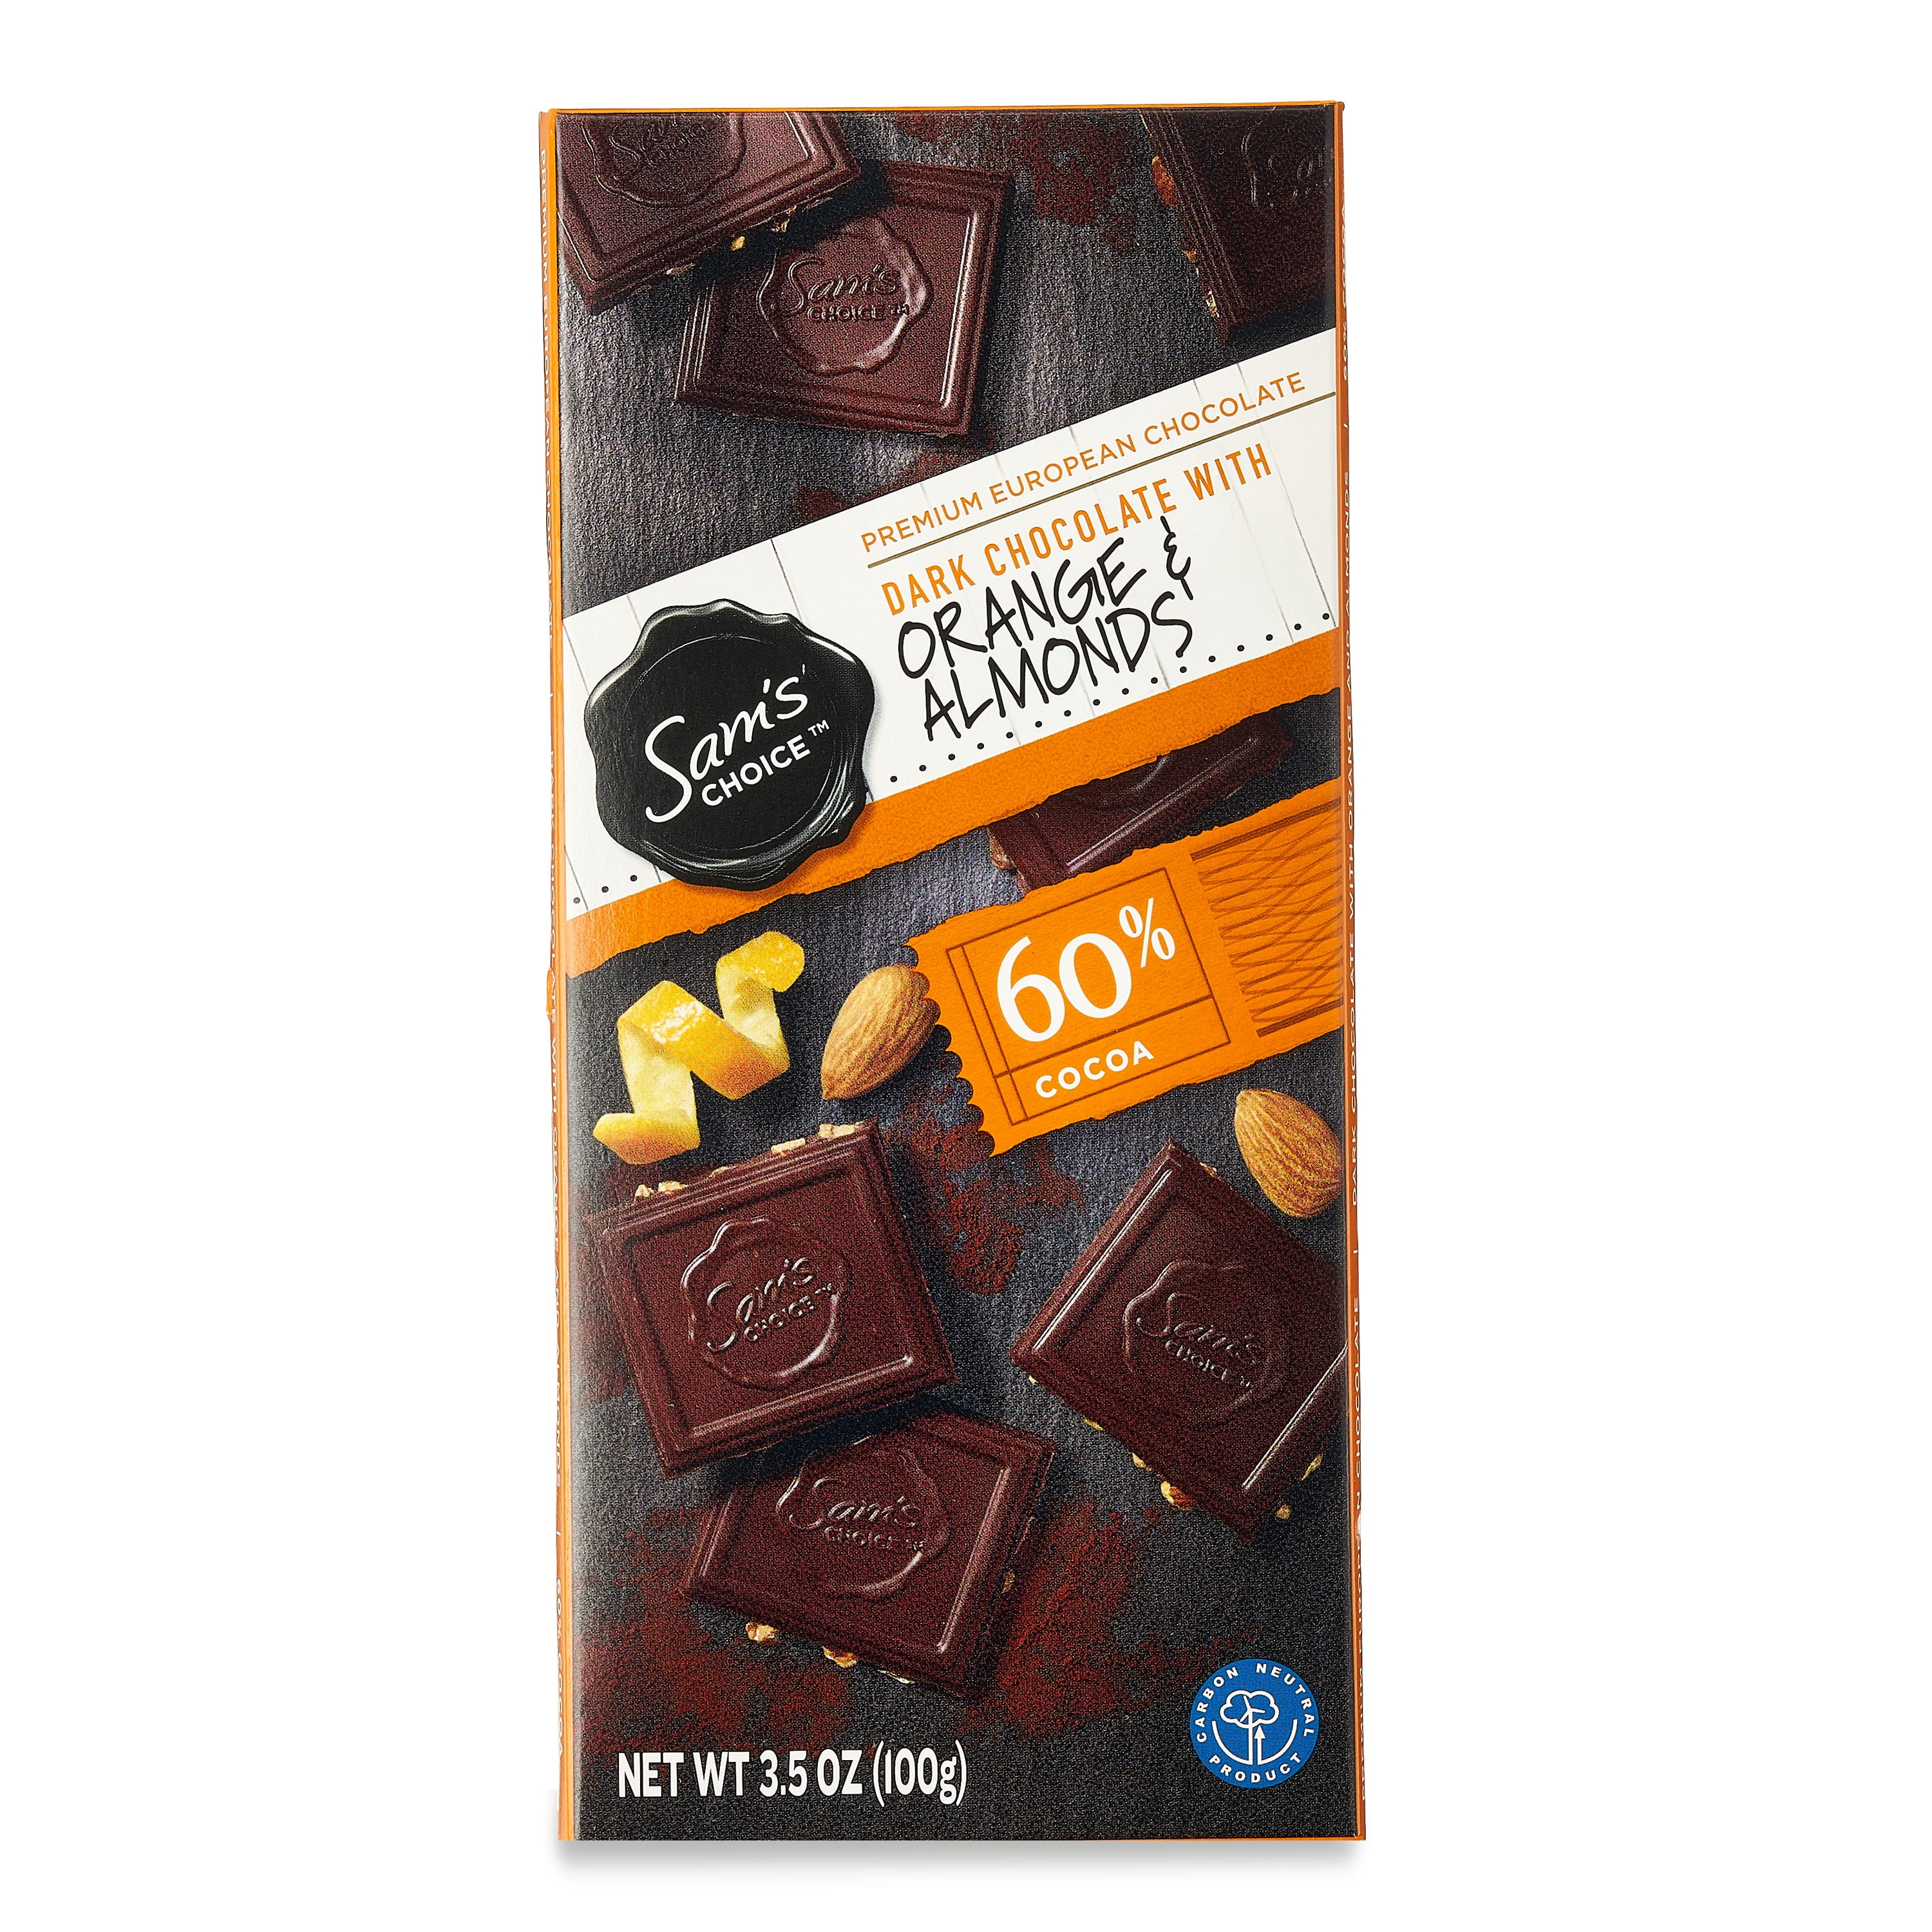 Sam's Choice 60% Dark Chocolate Orange & Almonds Bar, 3.5 Oz